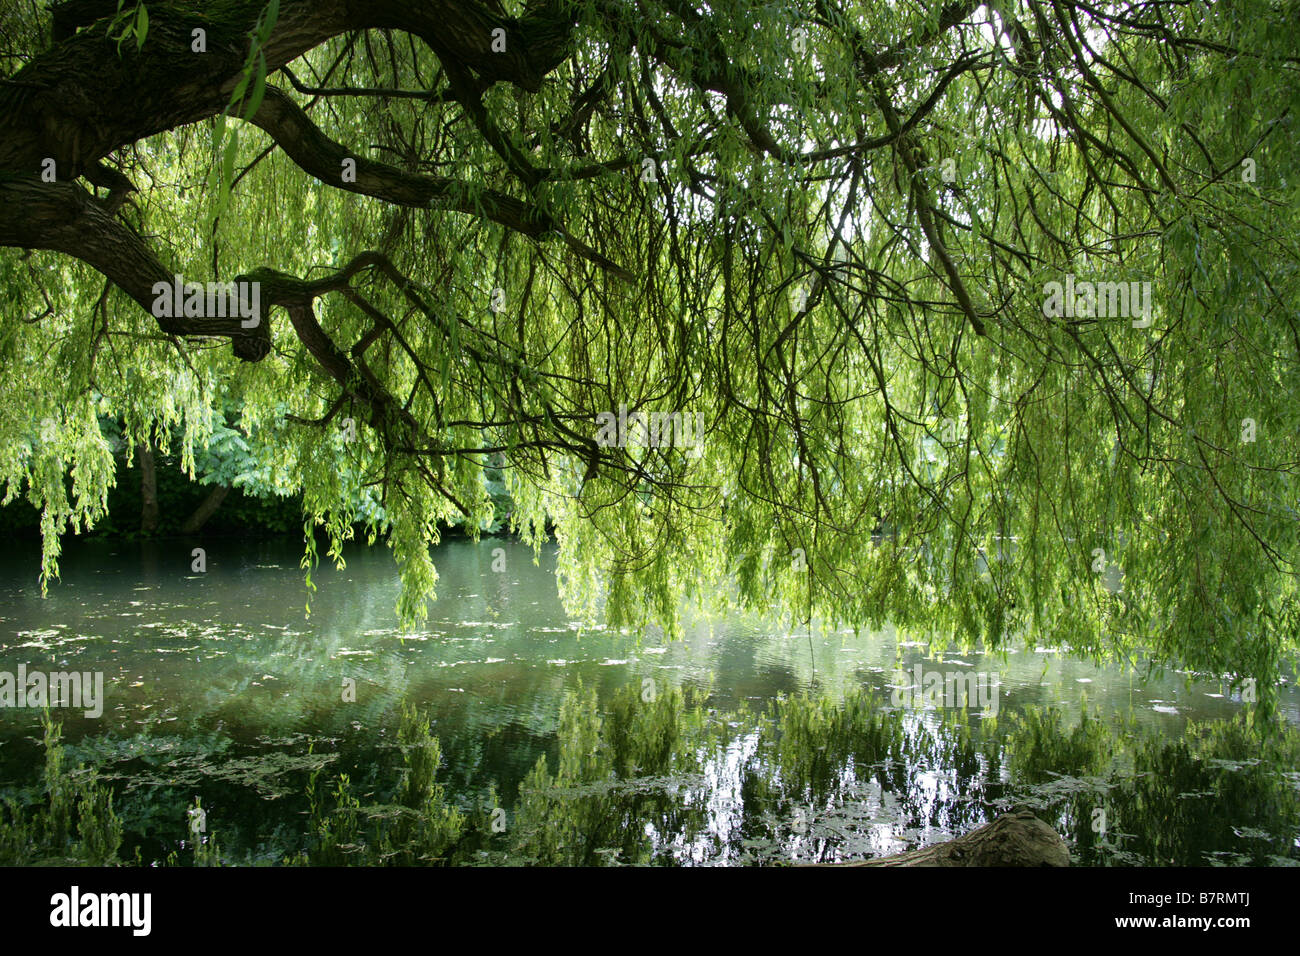 Weeping Willow, Salix babylonica, Salicaceae Stock Photo